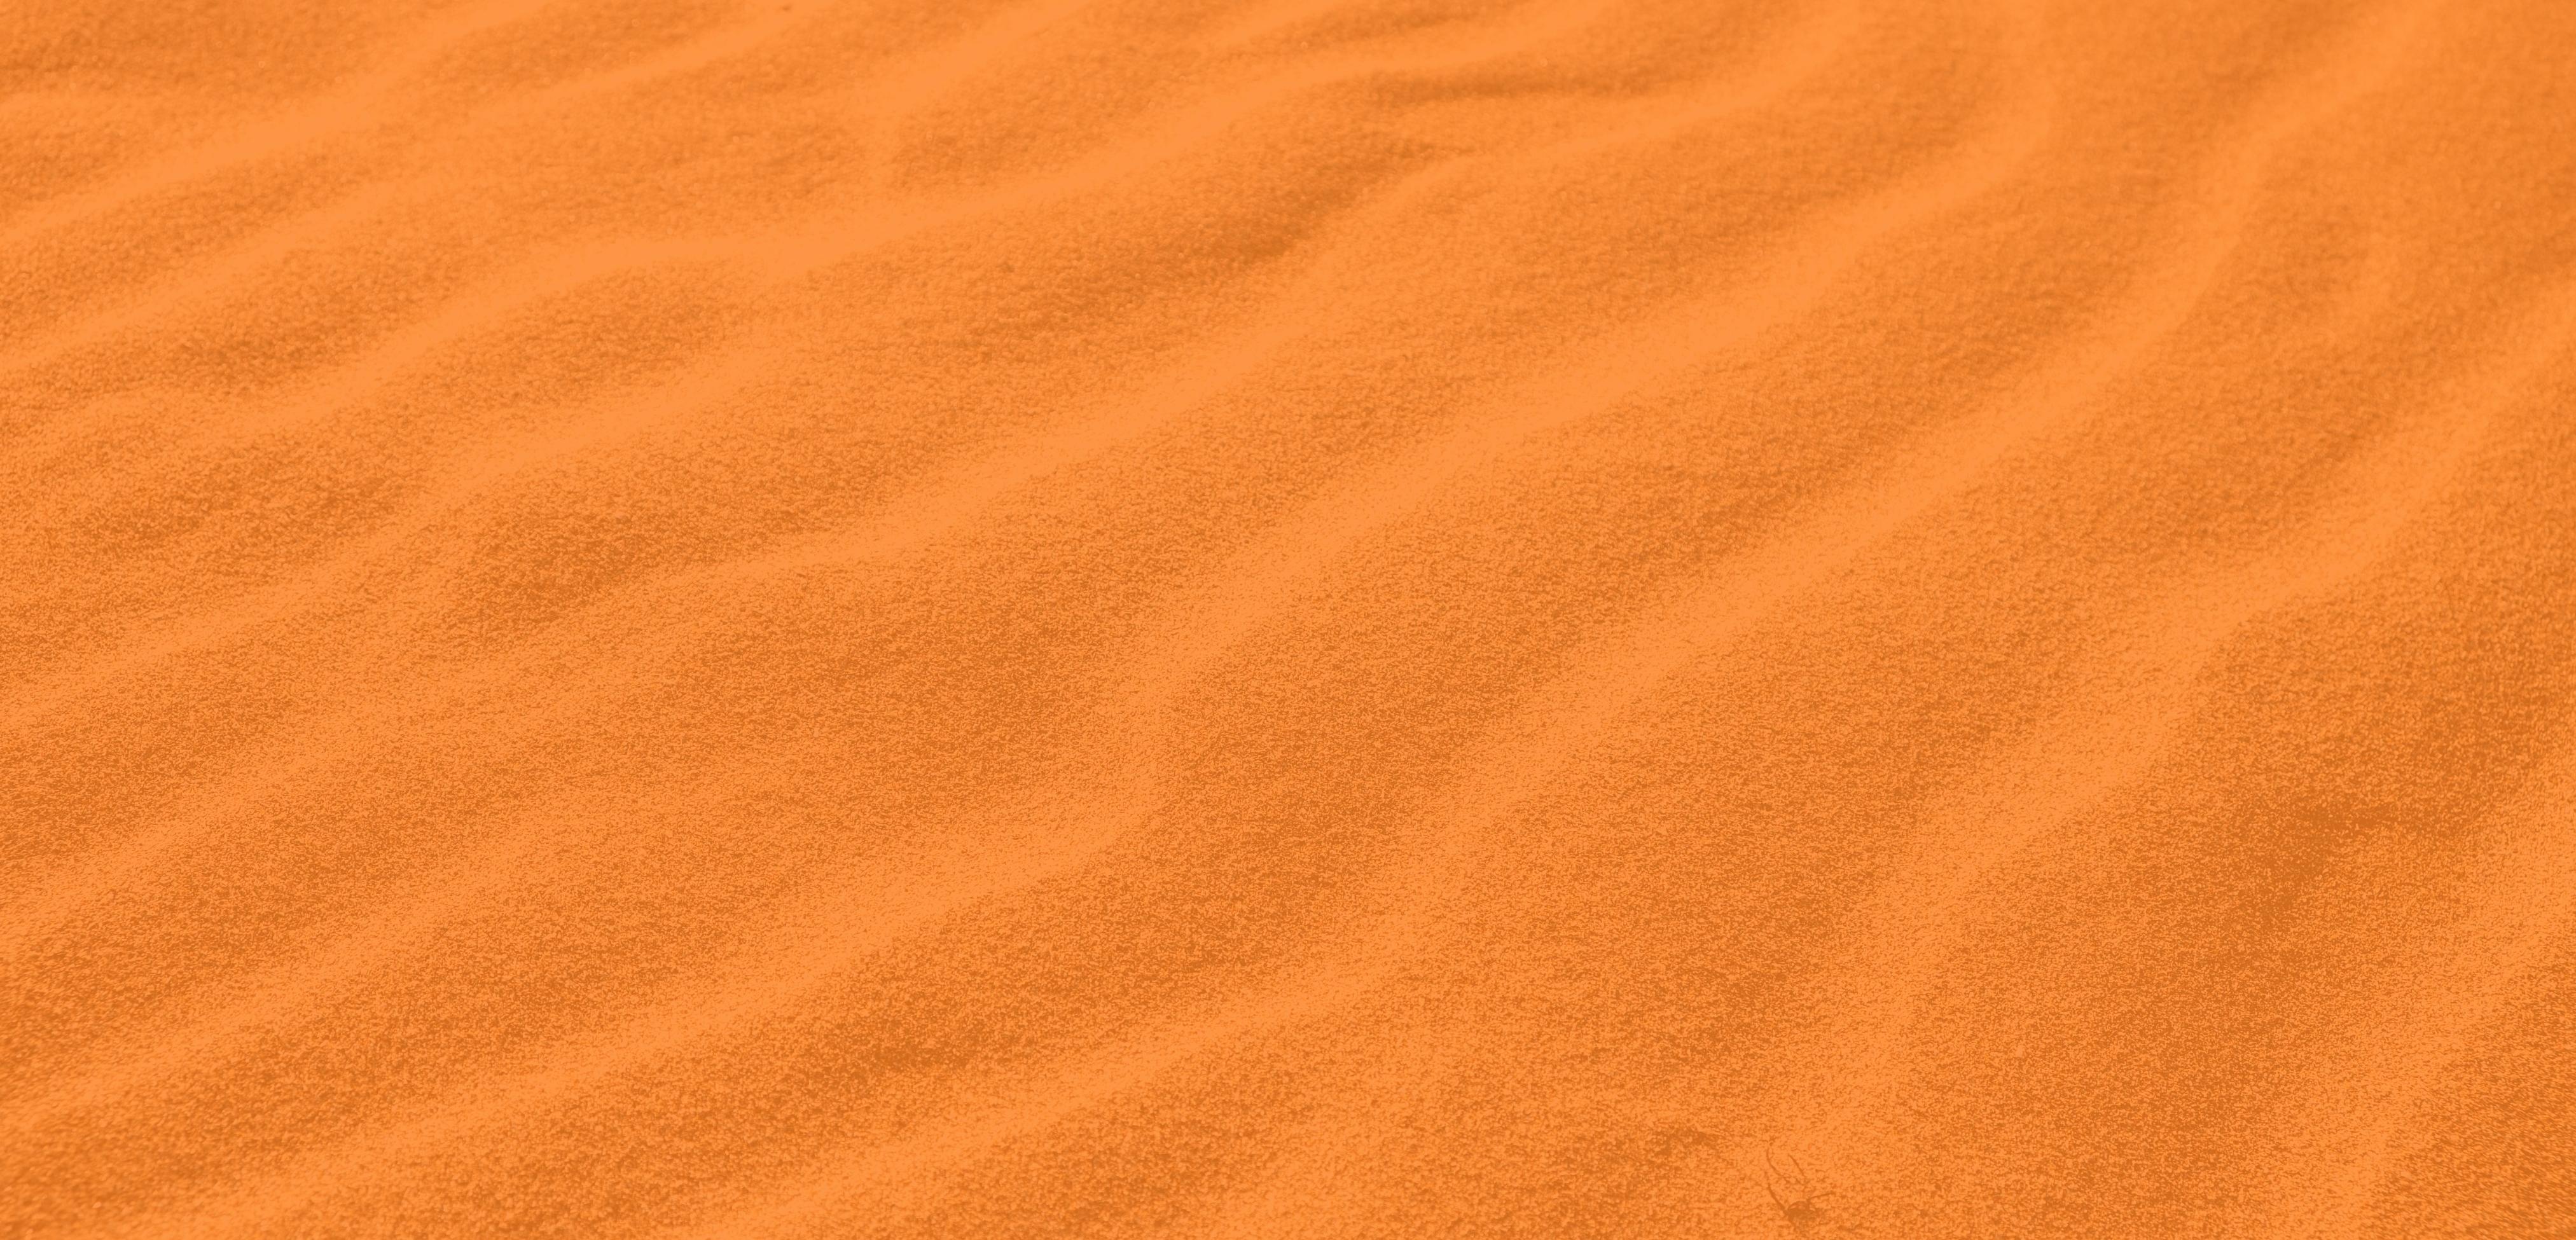 Image of orange sand